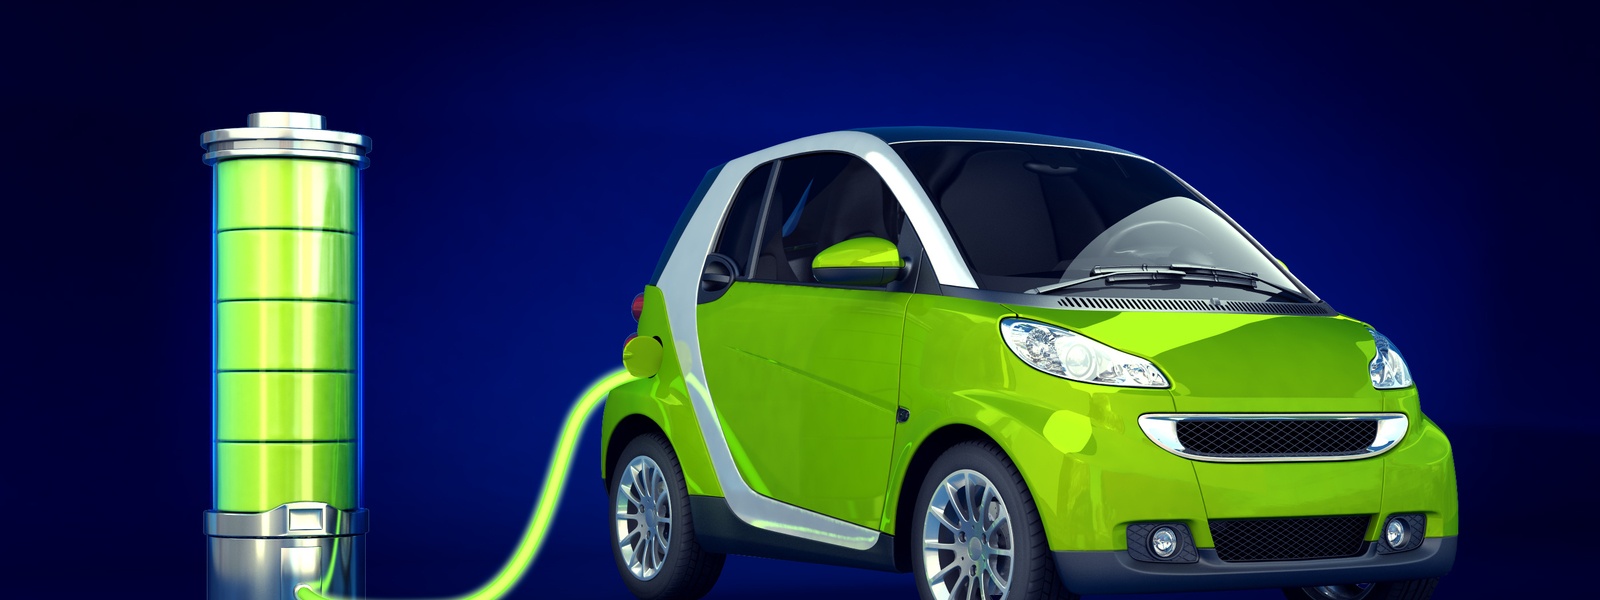 California may offer bigger rebates for electric car owners